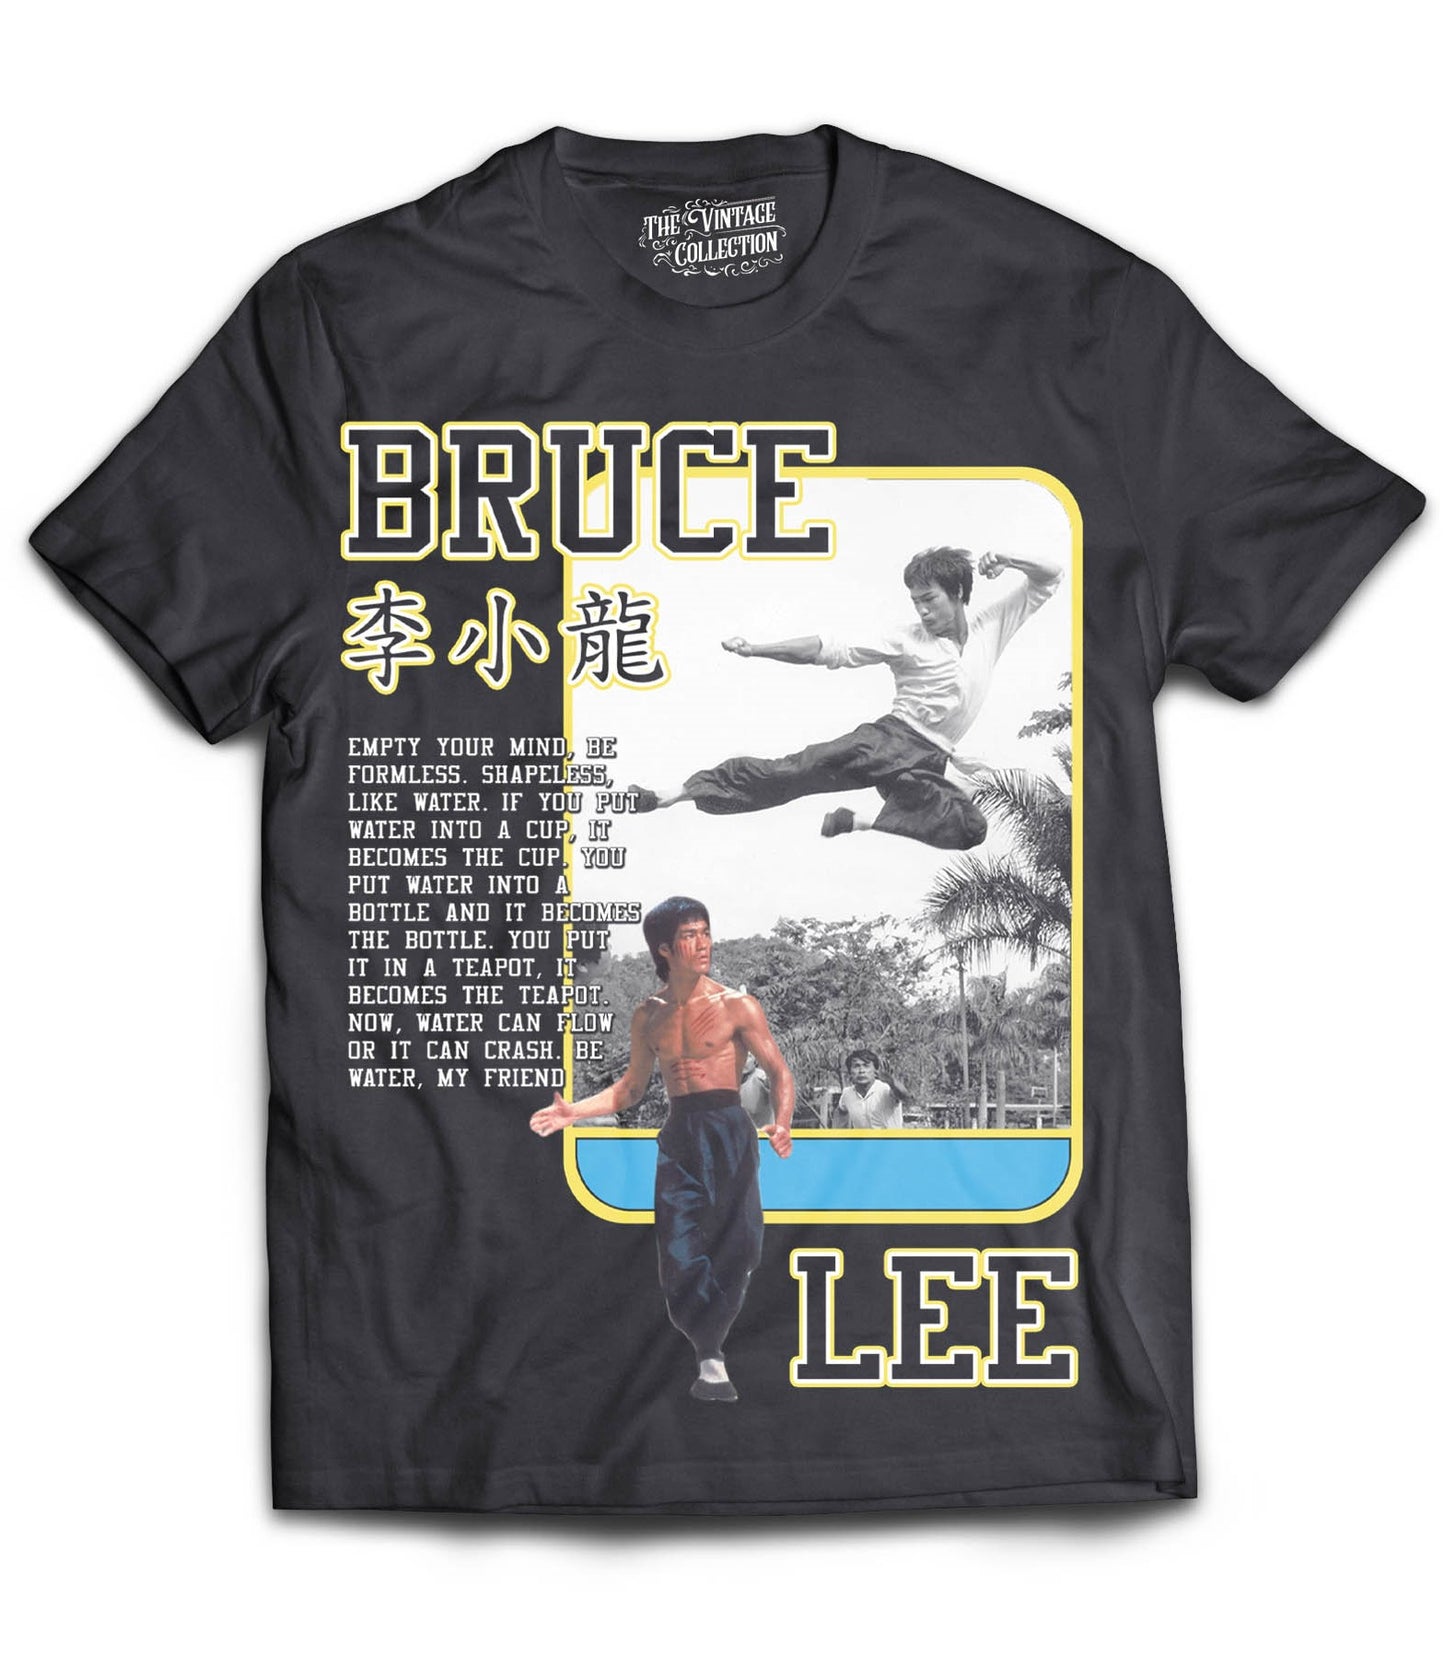 Bruce Lee Card Shirt (Black)